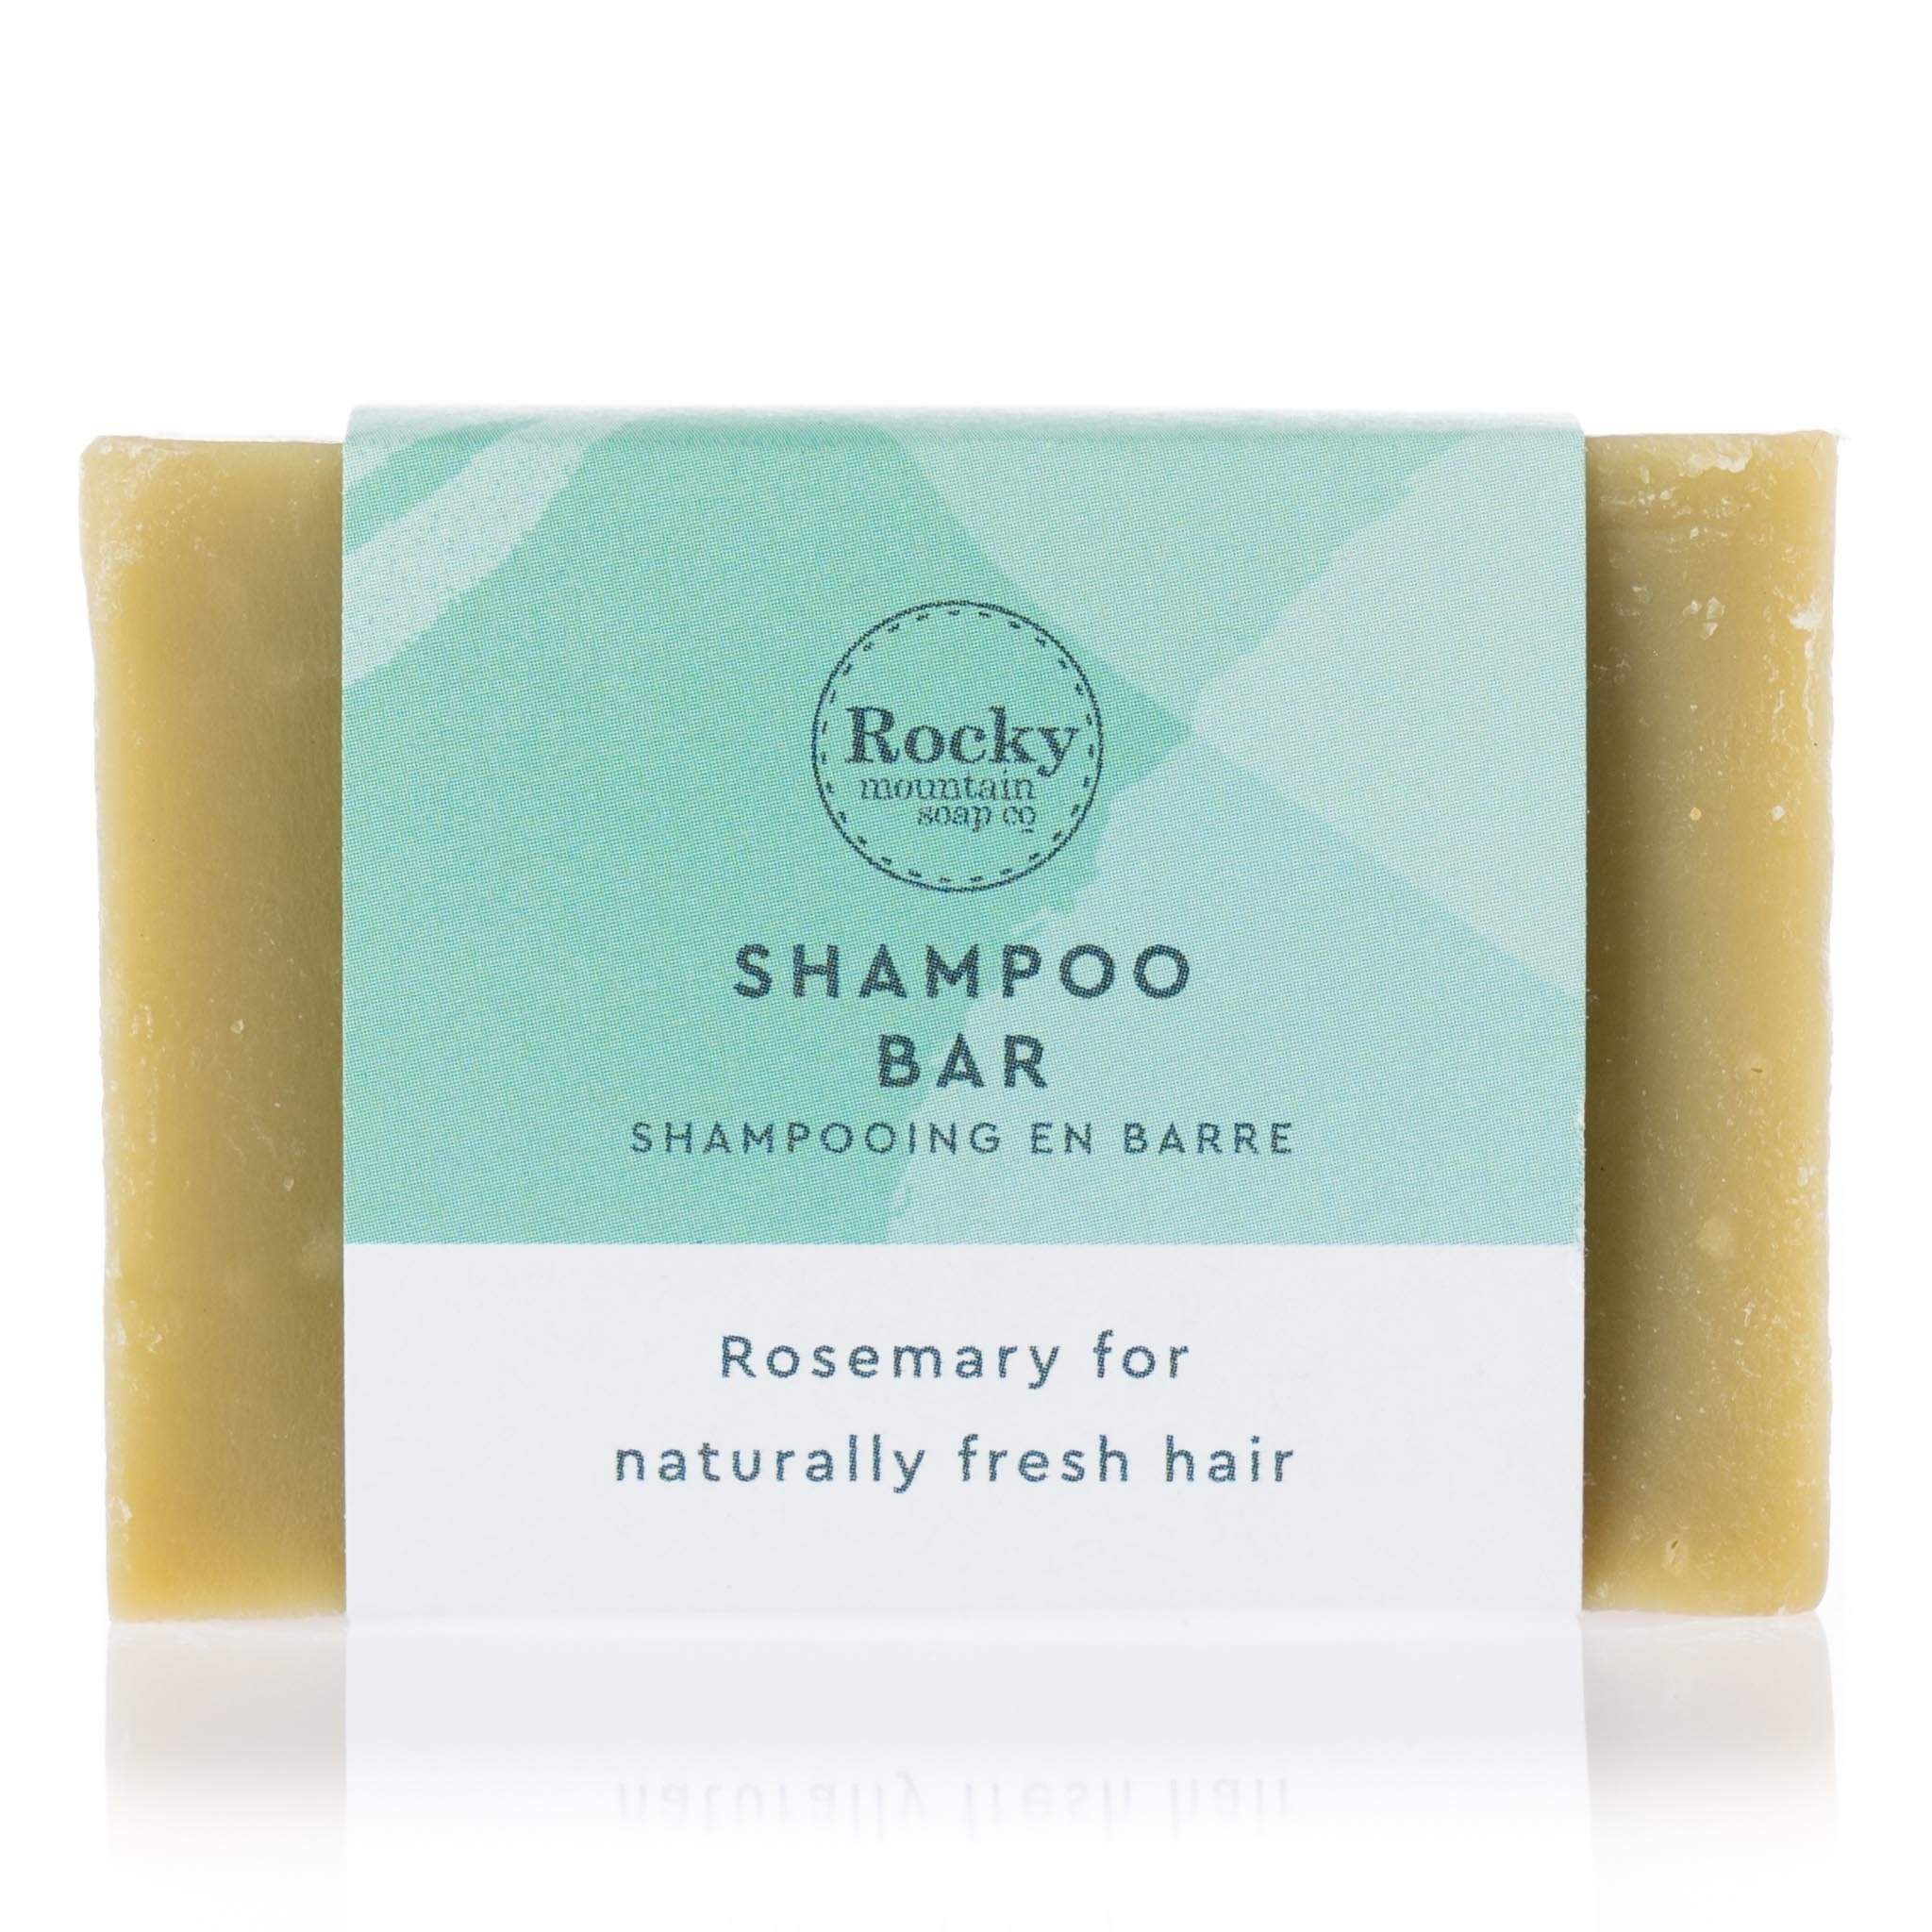 All Natural Shampoo Bar Soap SLS Free & Vegan